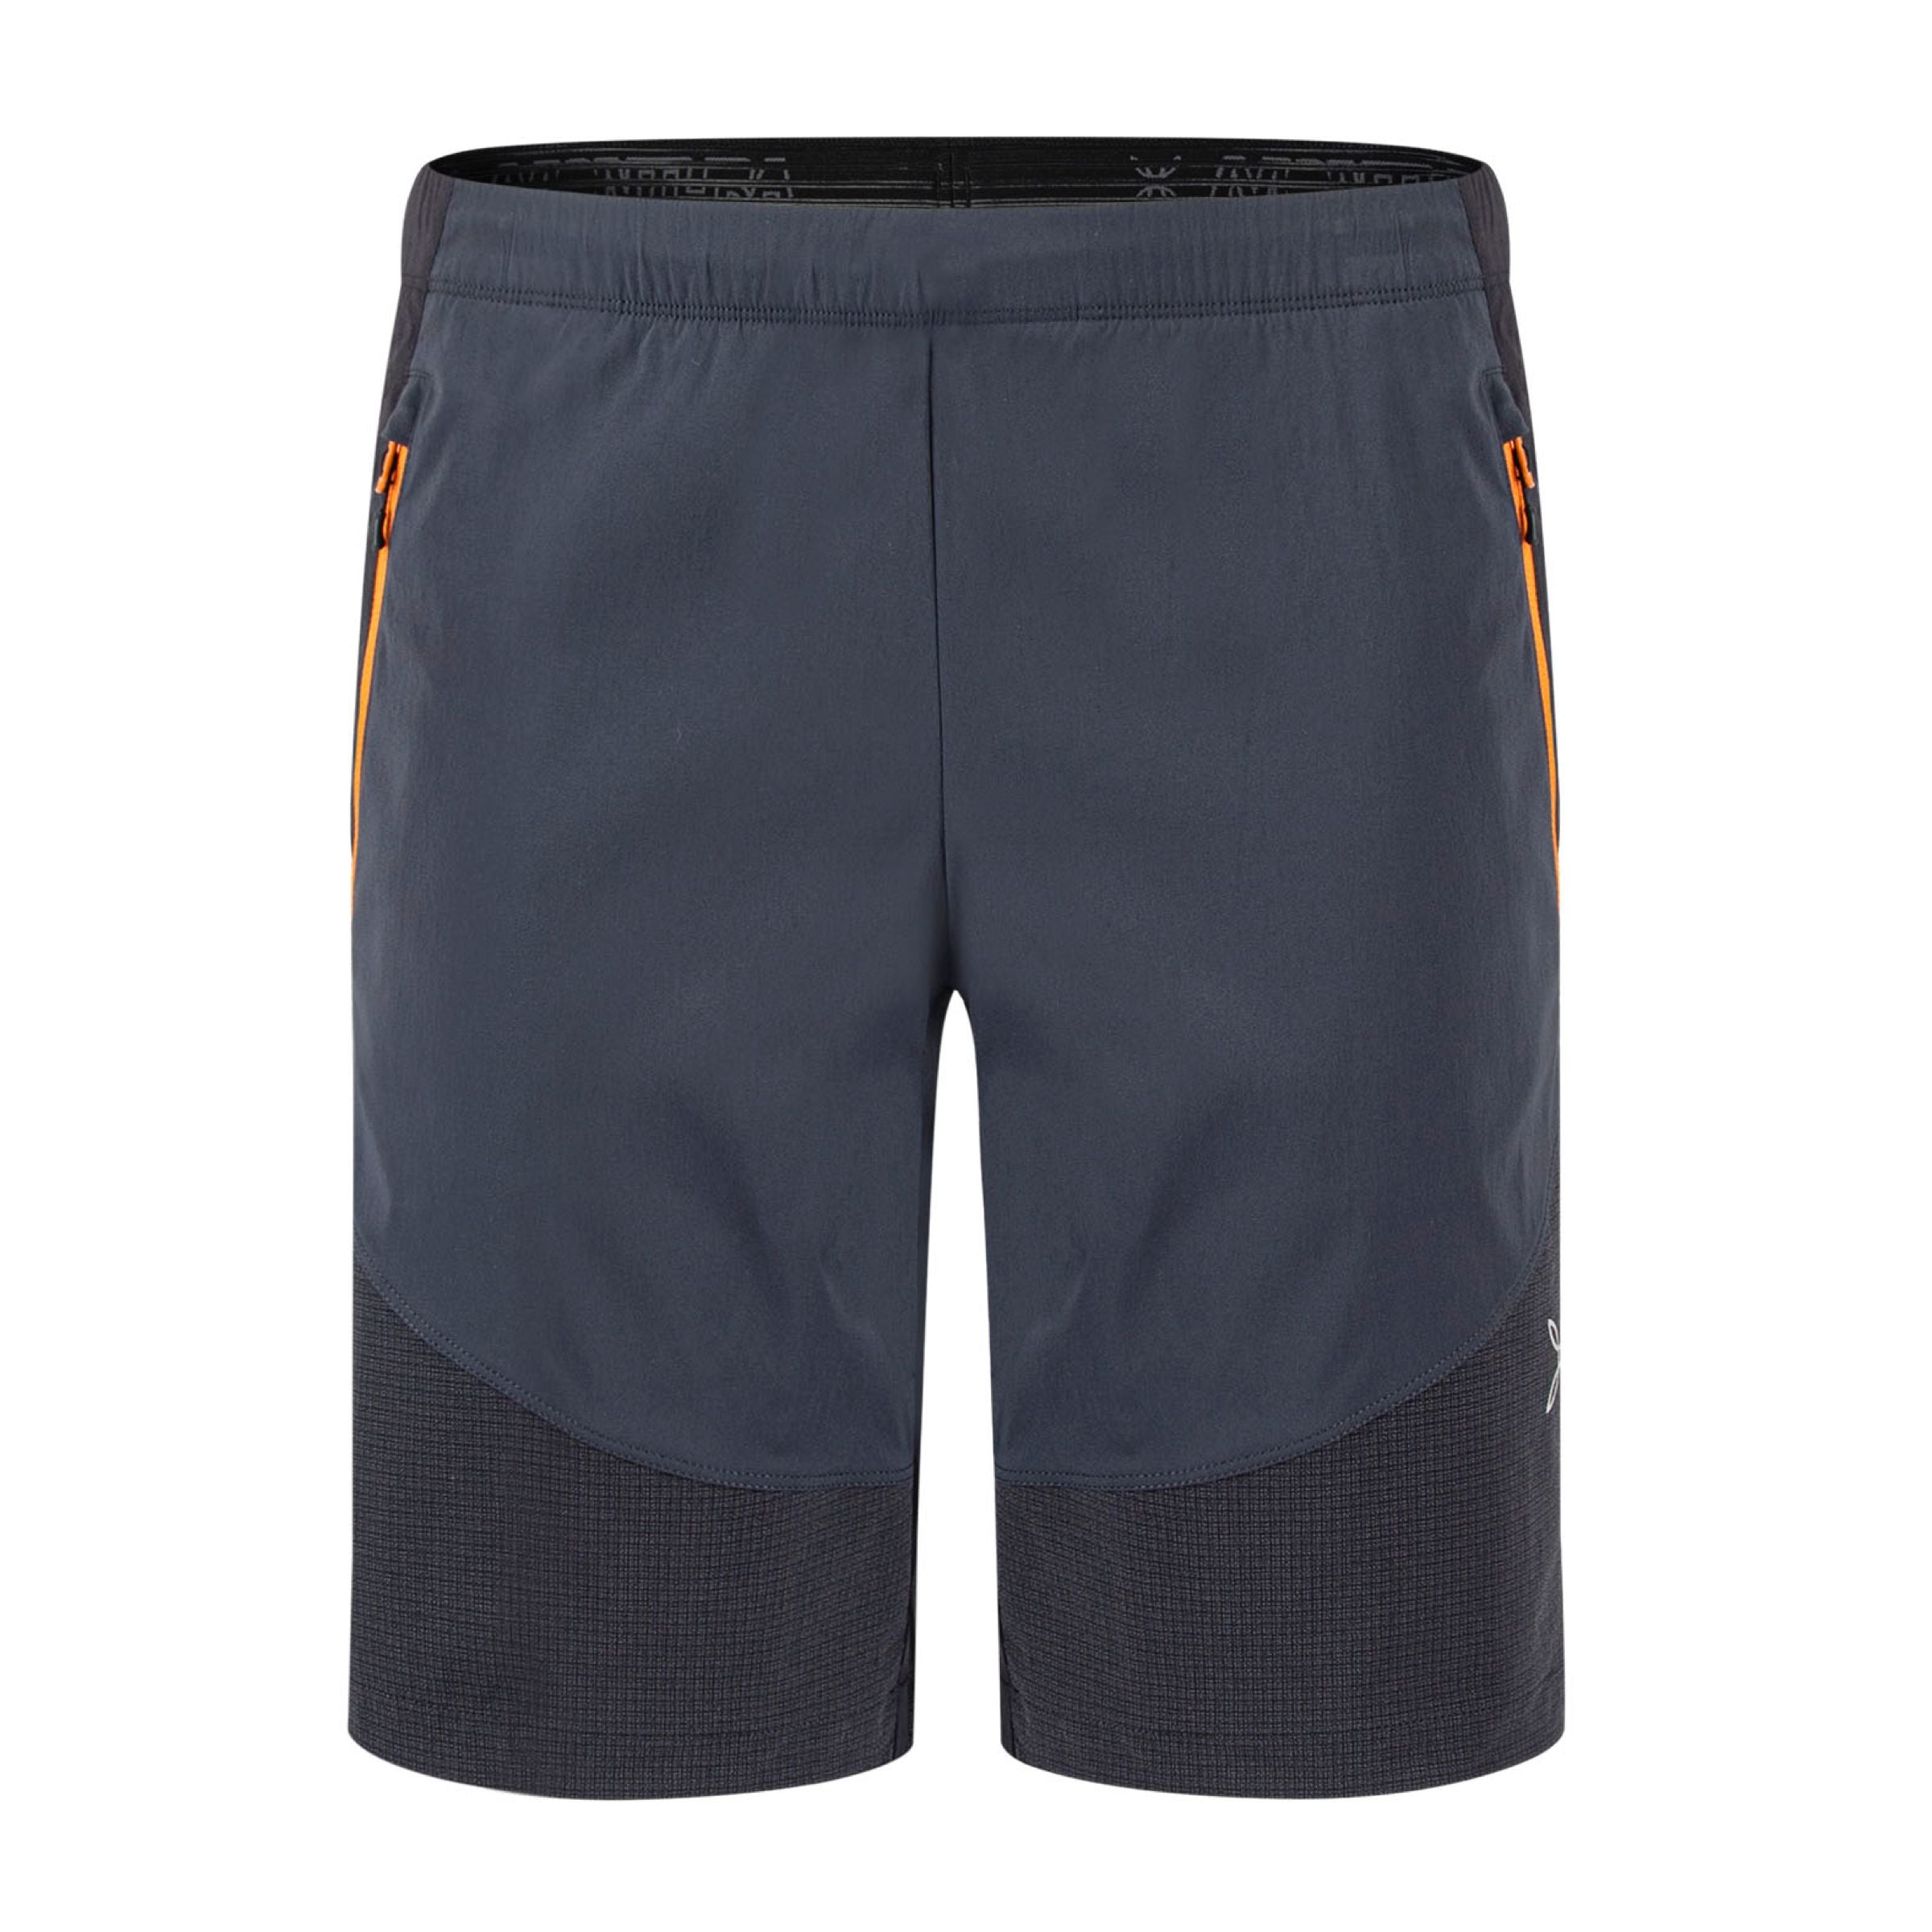 Men's Falcade Shorts Antracite/Mandarino 